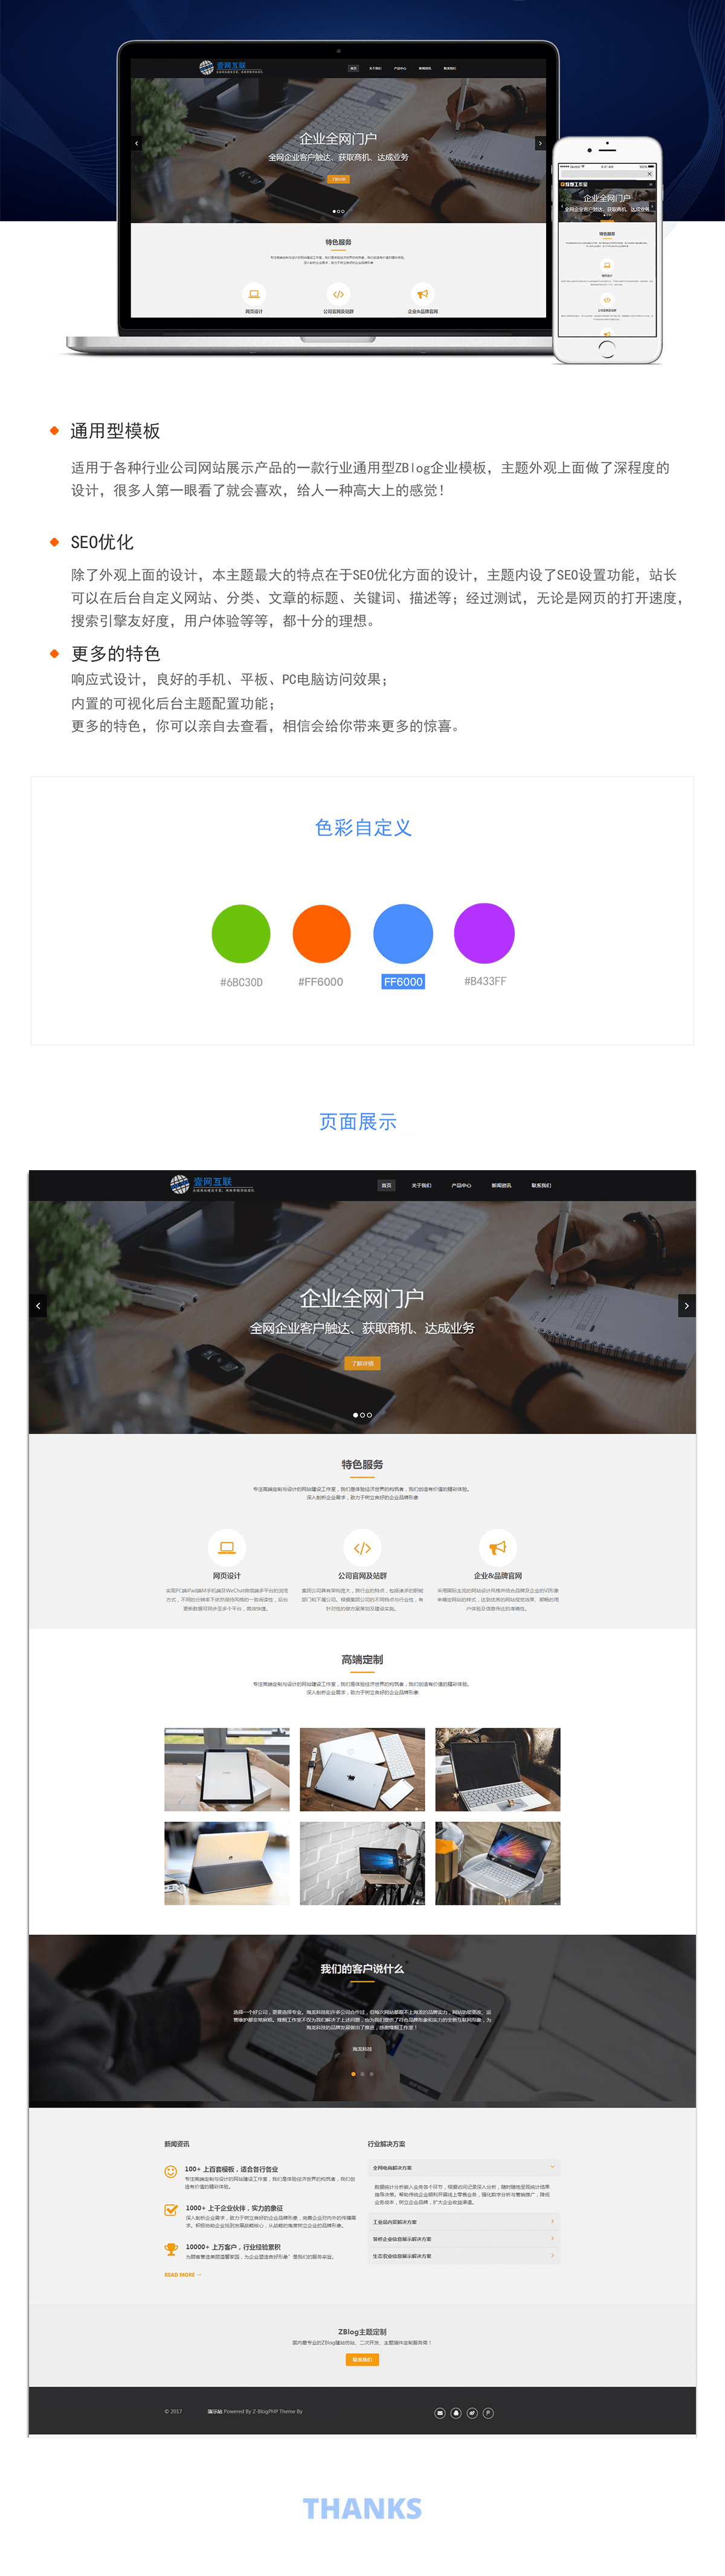 one-net壹网互联中文网站建设新企业网站设计模板案例